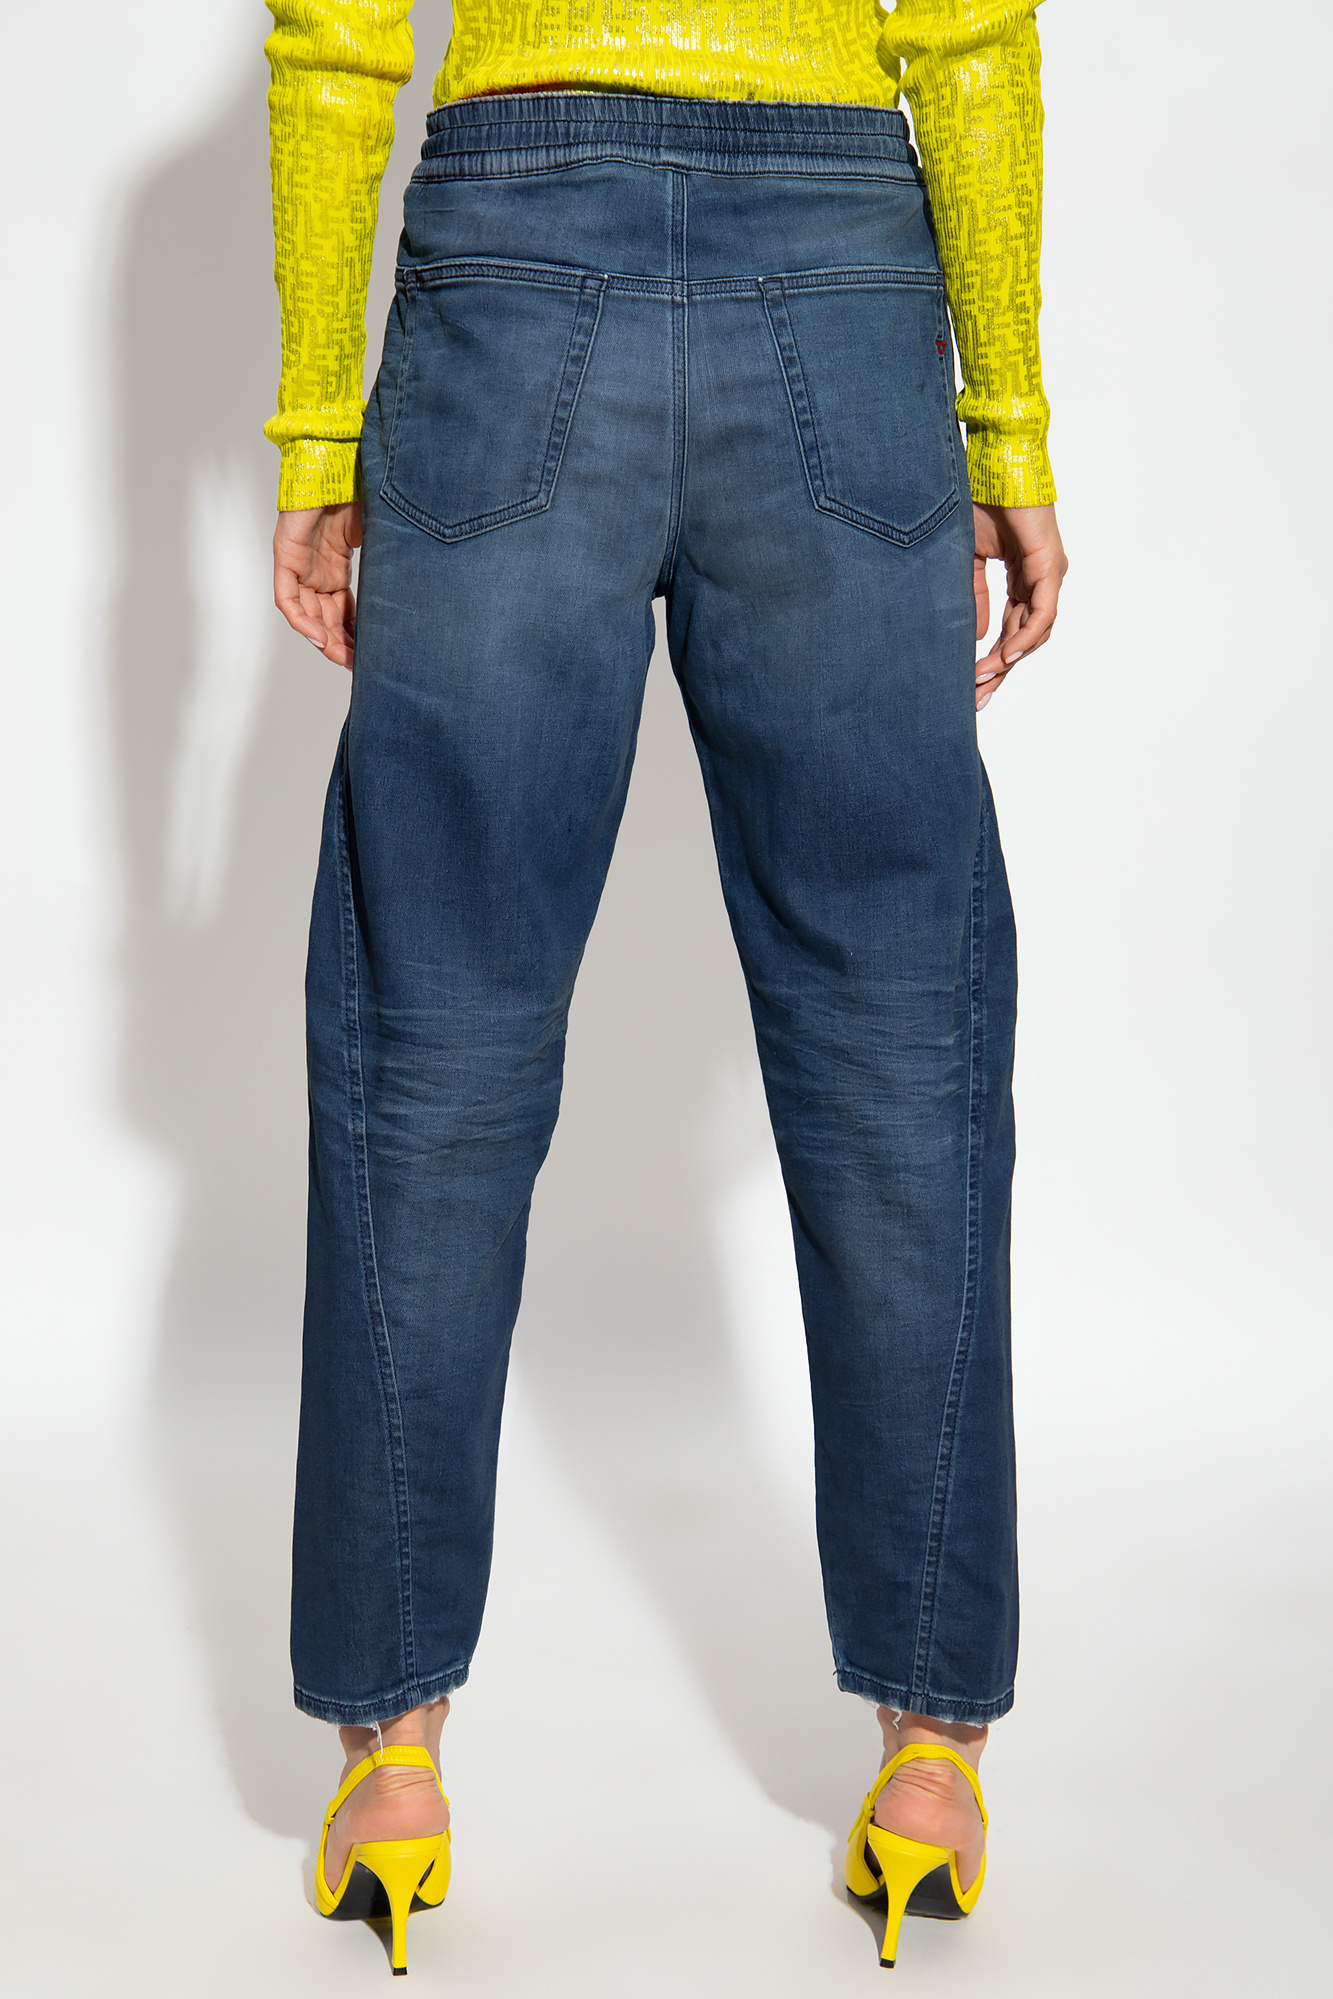 Diesel 'D-KRAILEY' jogger jeans, Women's Clothing